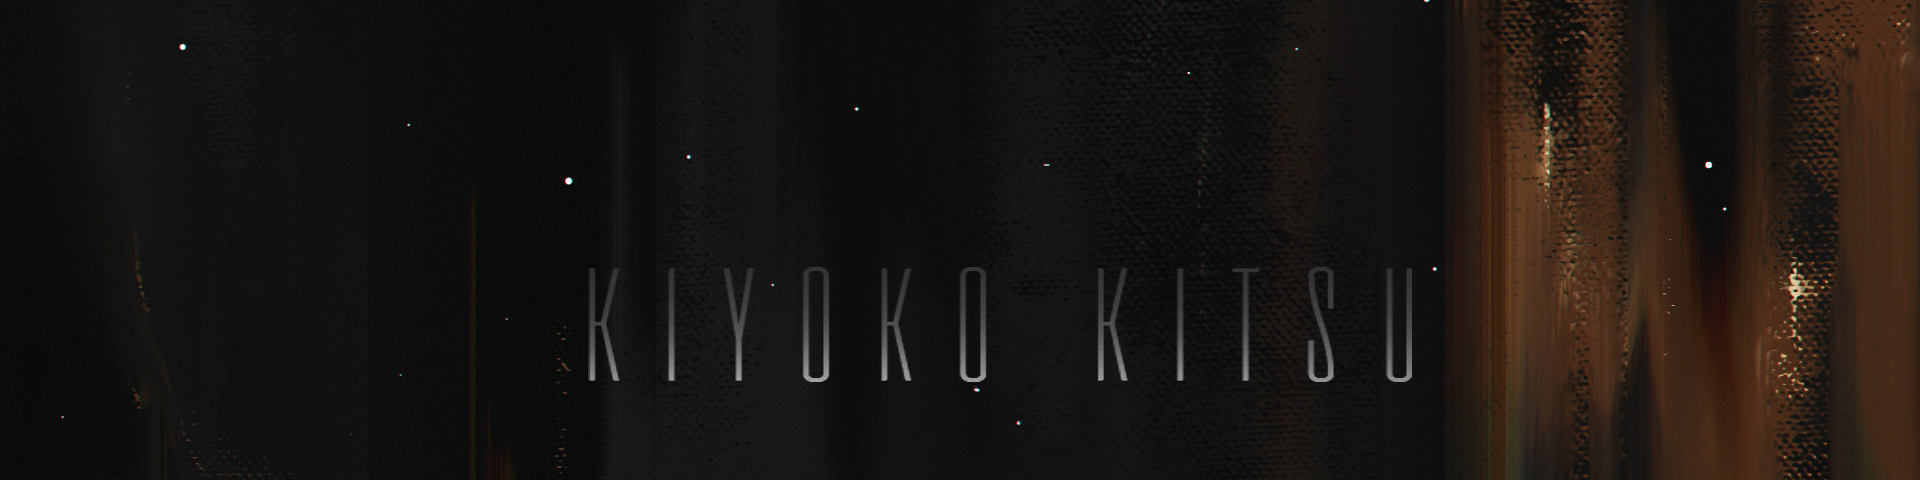 обложка автора KiyokoKitsu